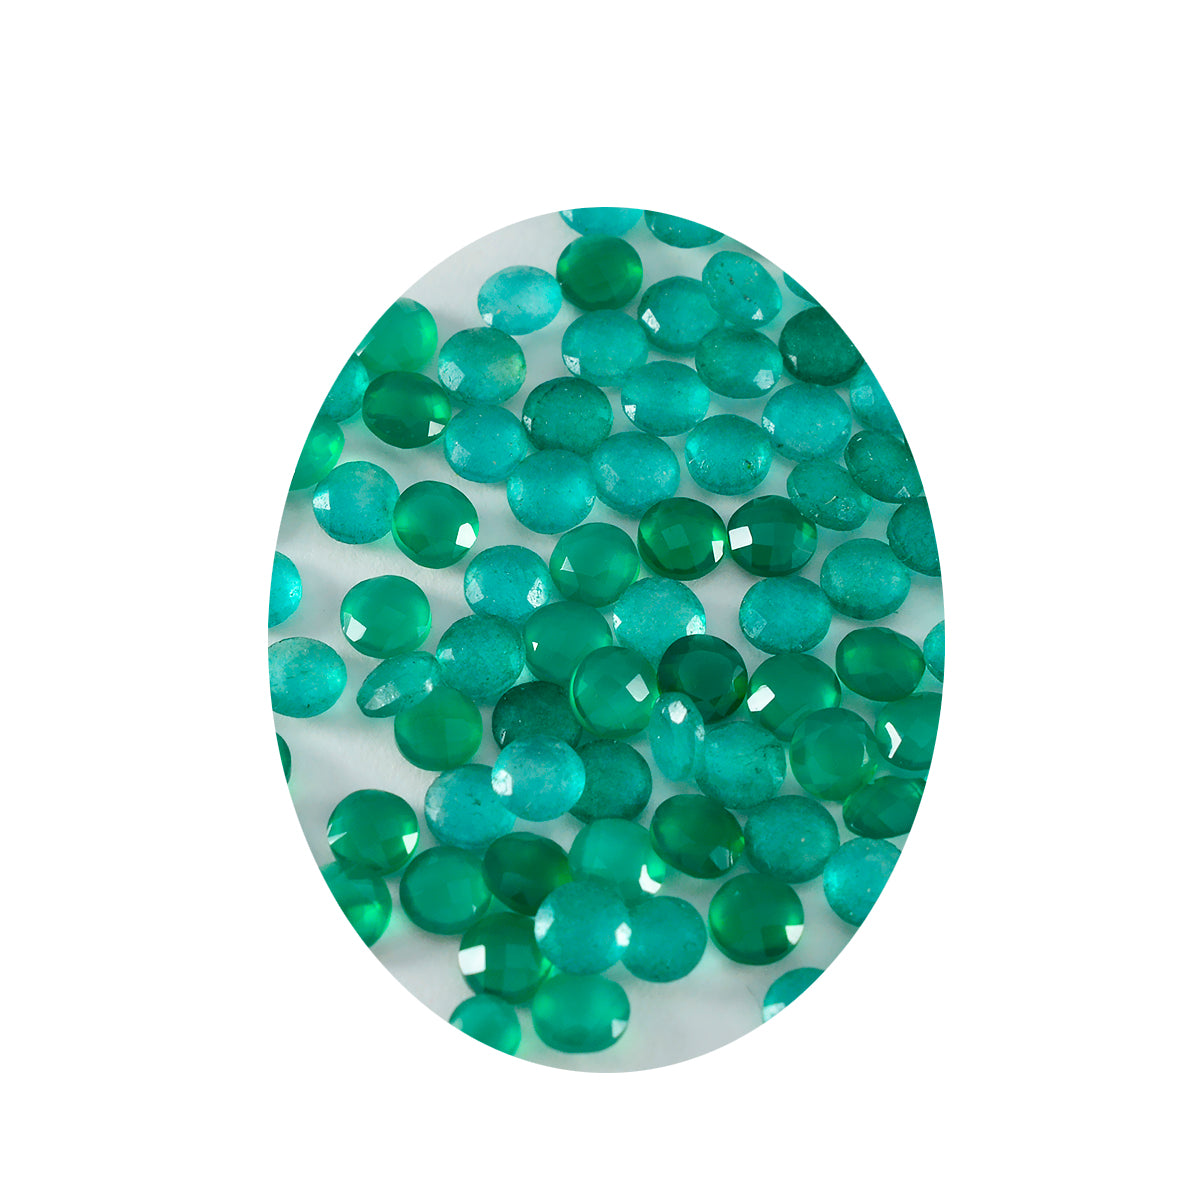 riyogems 1шт настоящая зеленая яшма ограненная 2х2 мм круглая форма хорошее качество драгоценный камень